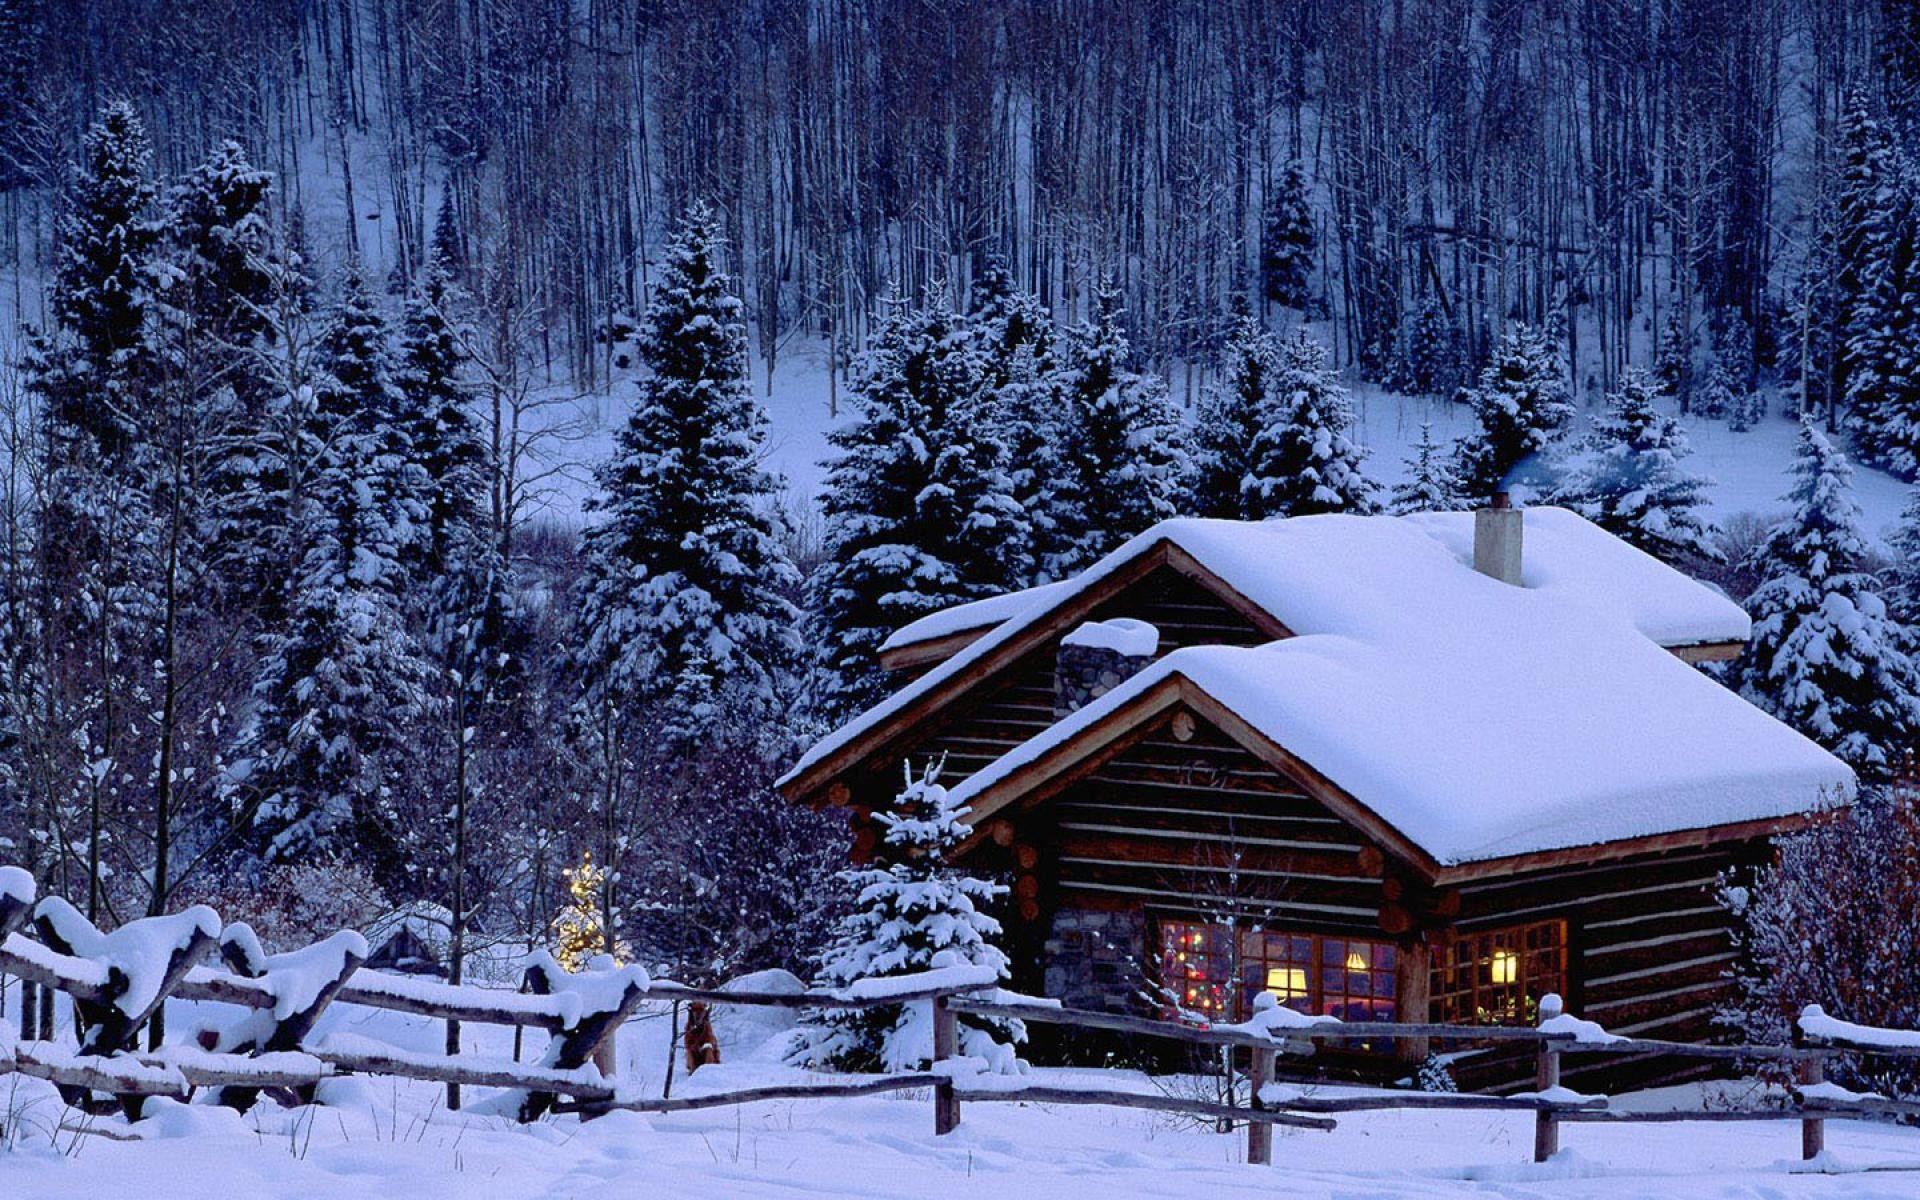 dreamy, scene, snow, wallpaper, scenery, warmly, house